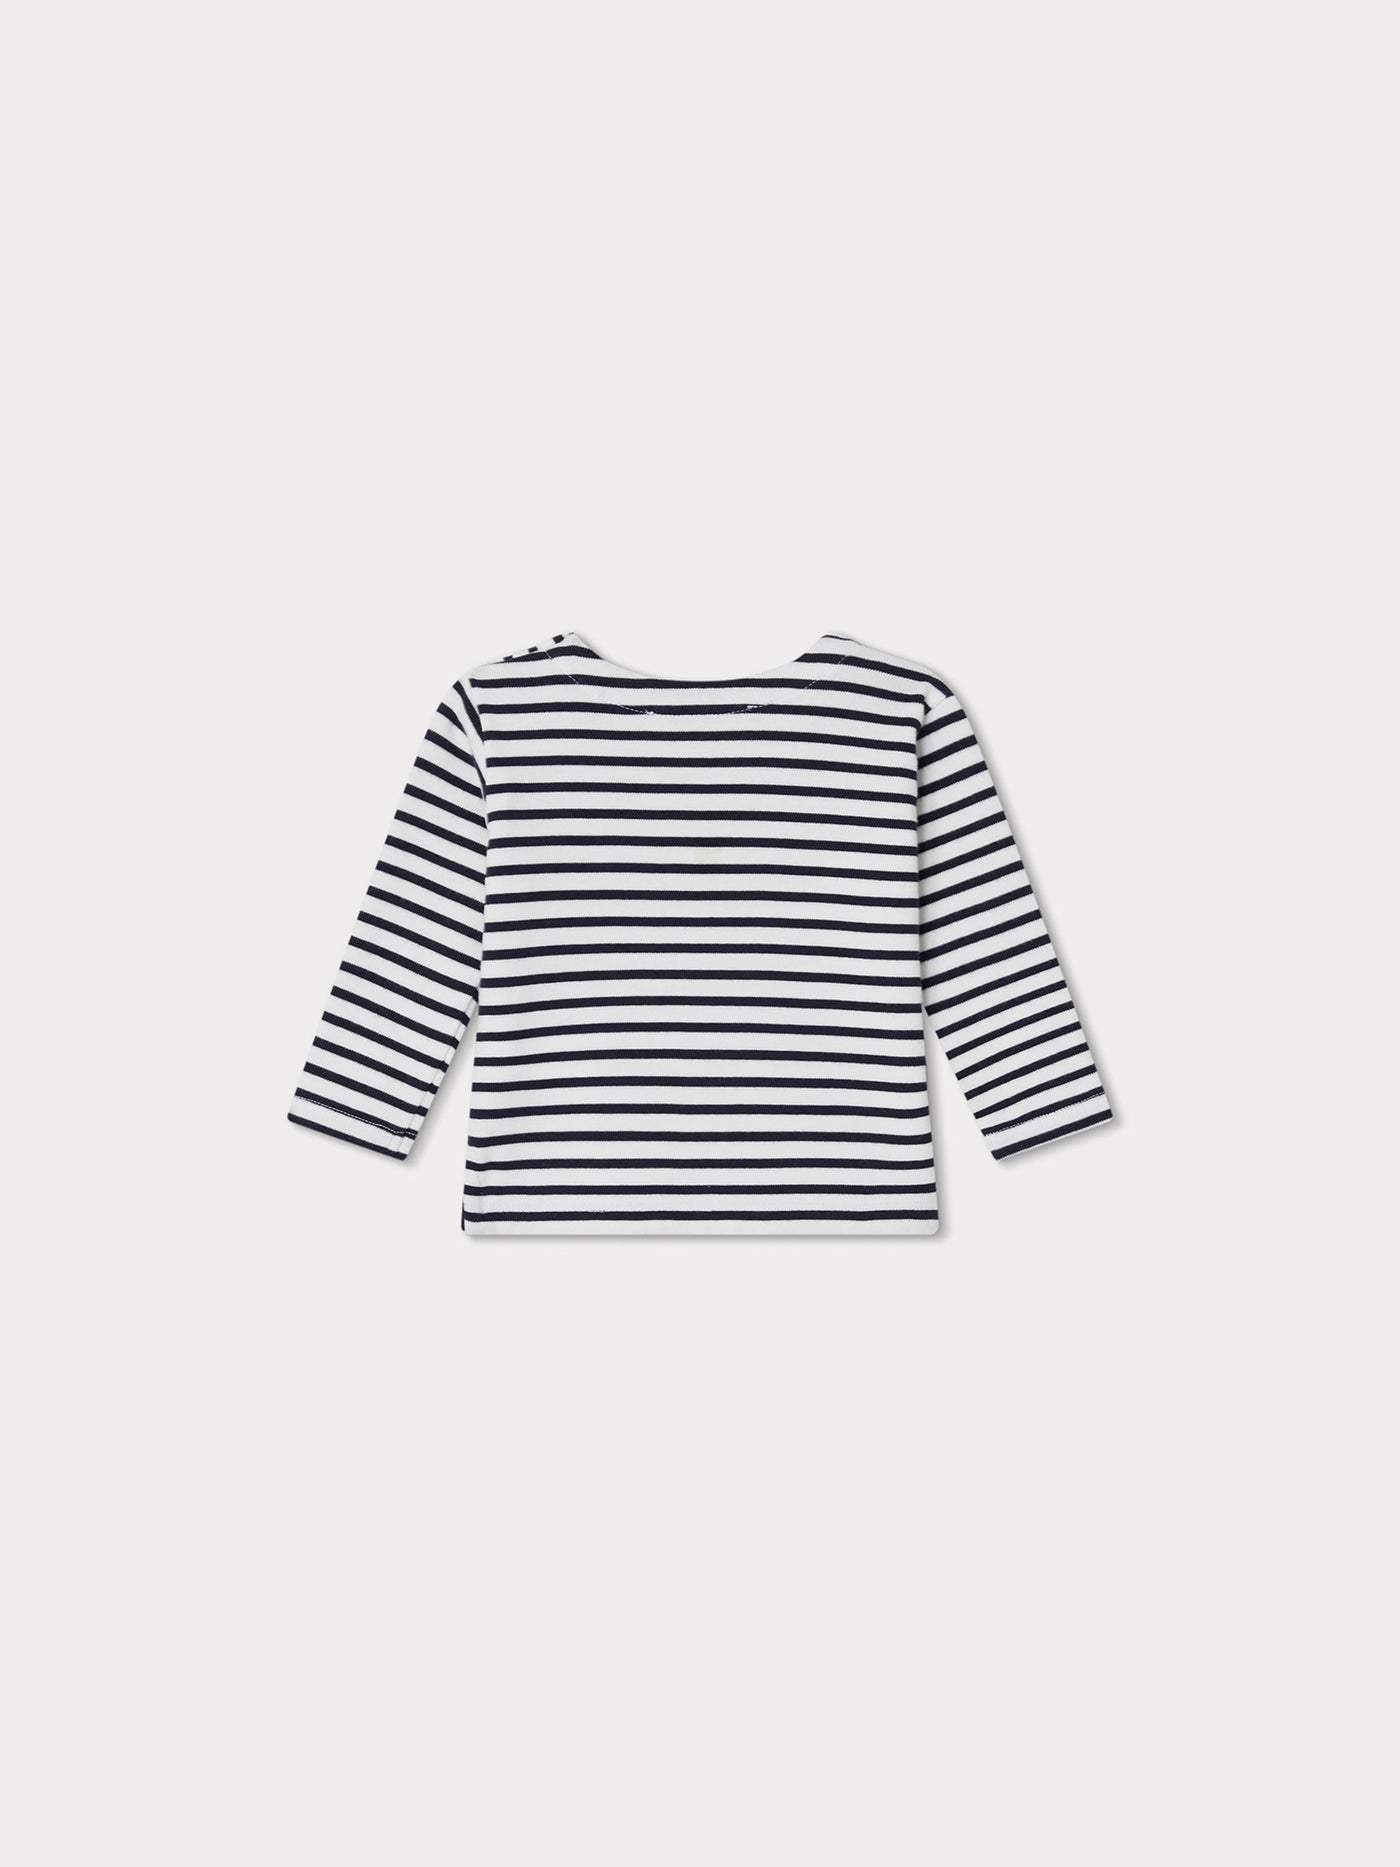 Tourbillon T-shirt navy stripes